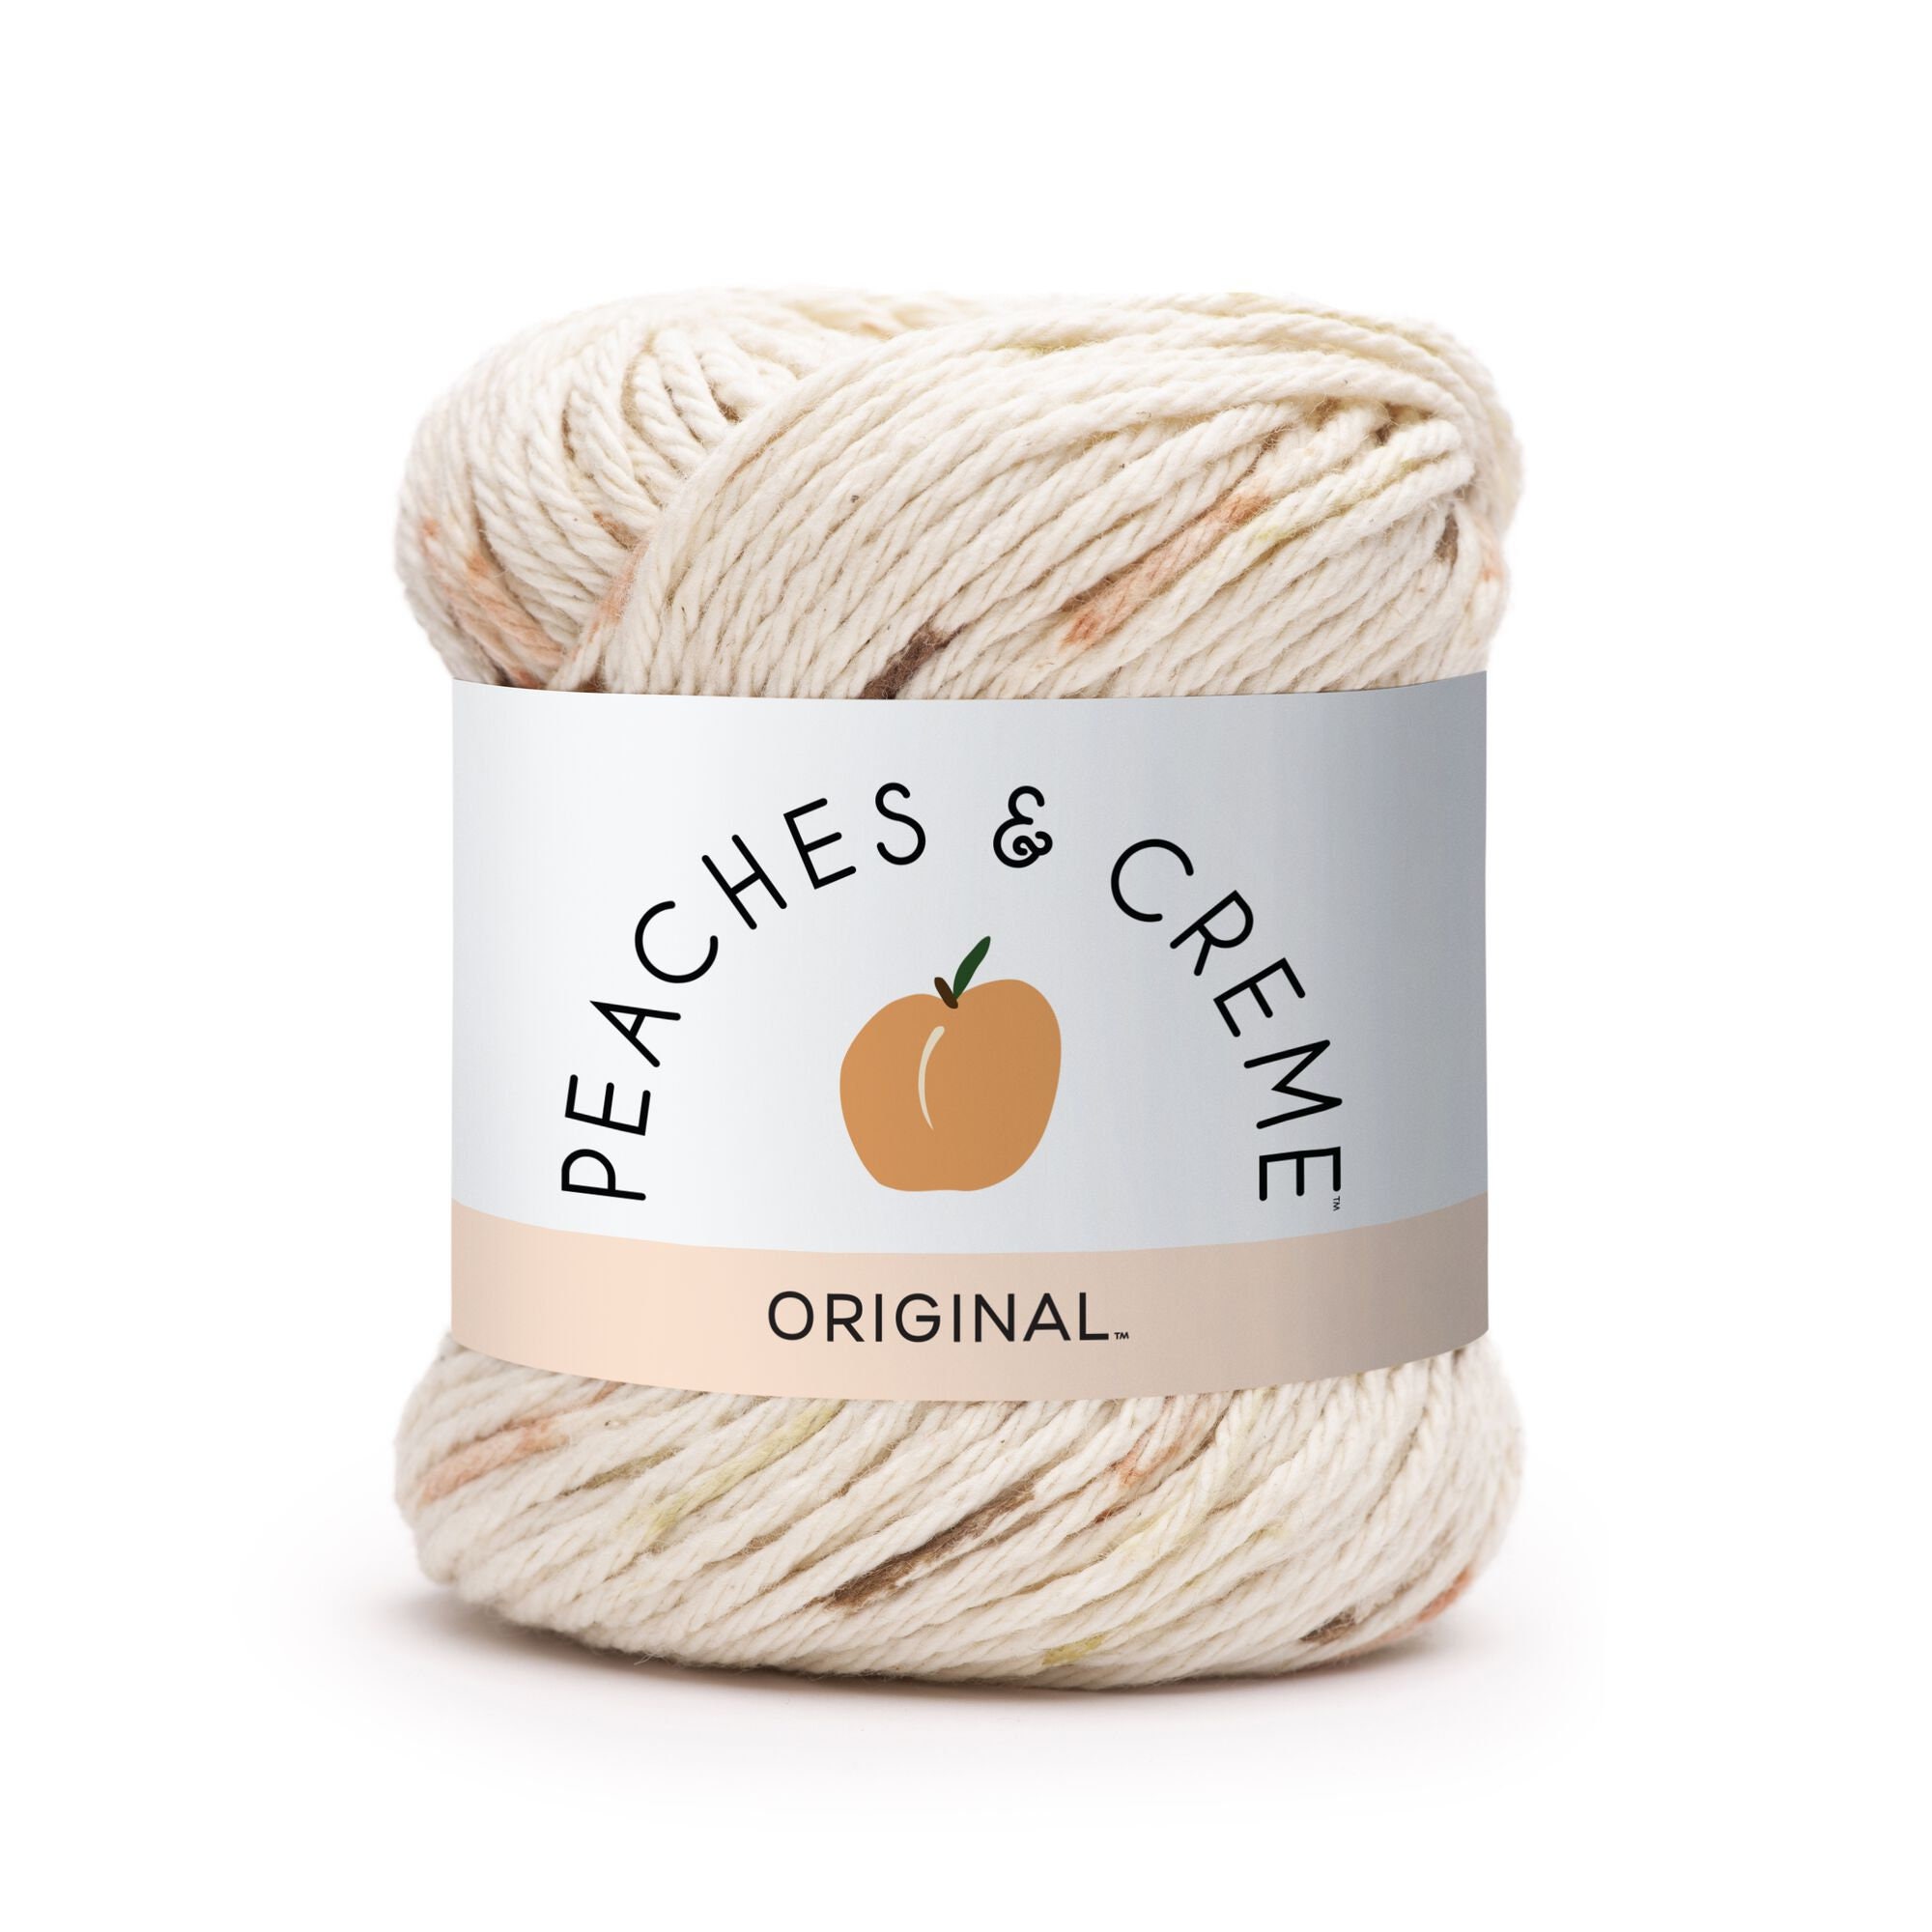 Peaches & Creme Medium Cotton Stripey Yarn Linen - 2 oz